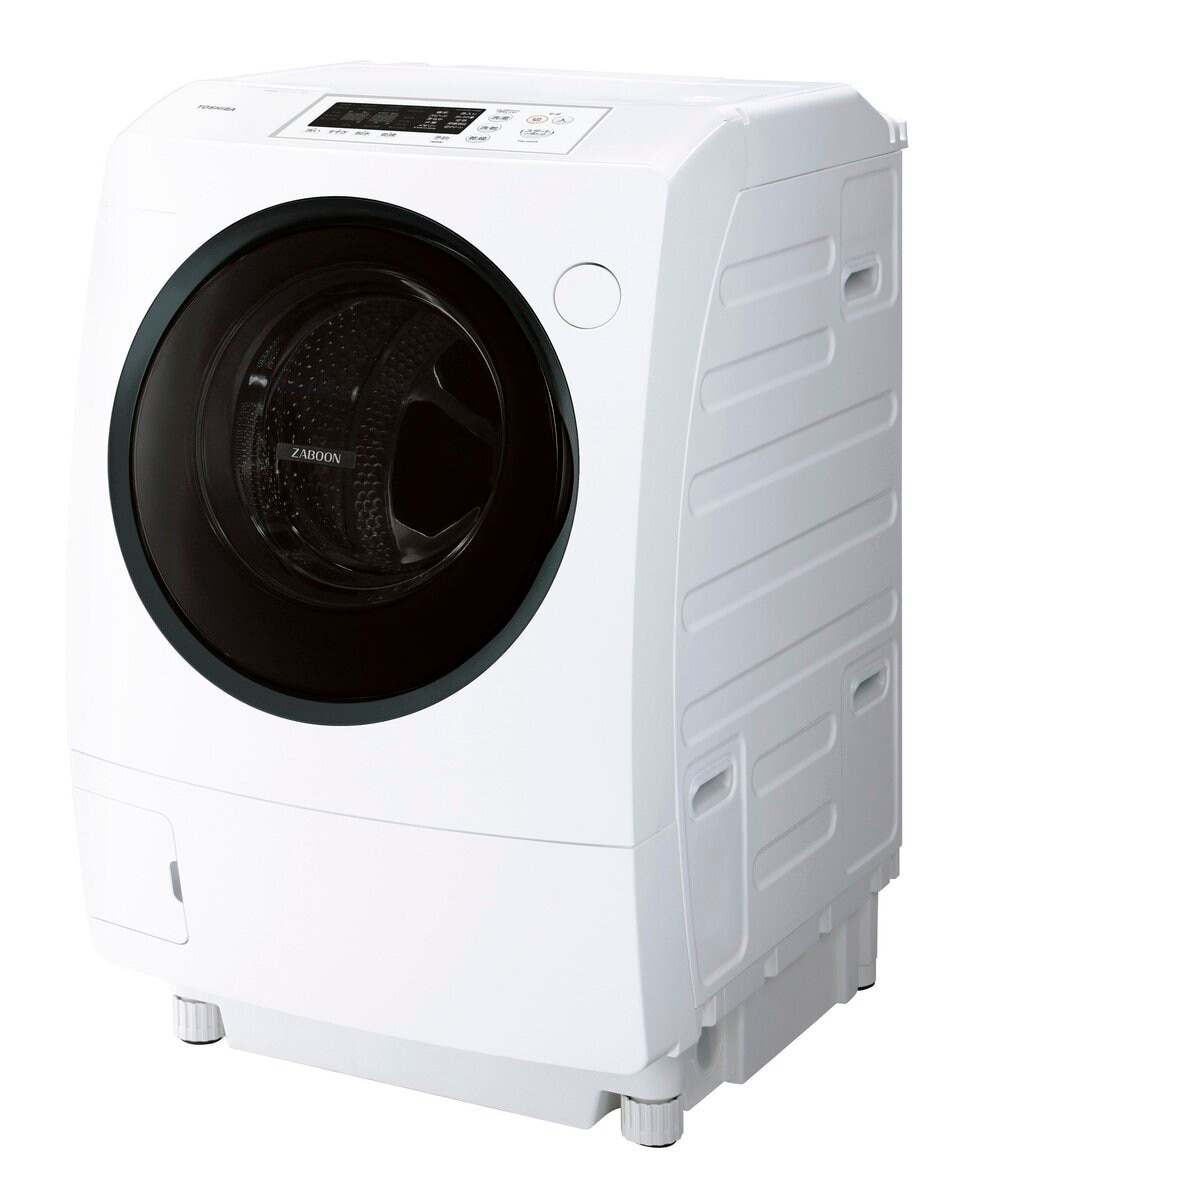 東芝洗濯乾燥機(TW-Z8100L(C)) 説明書等有り - 東京都の家具